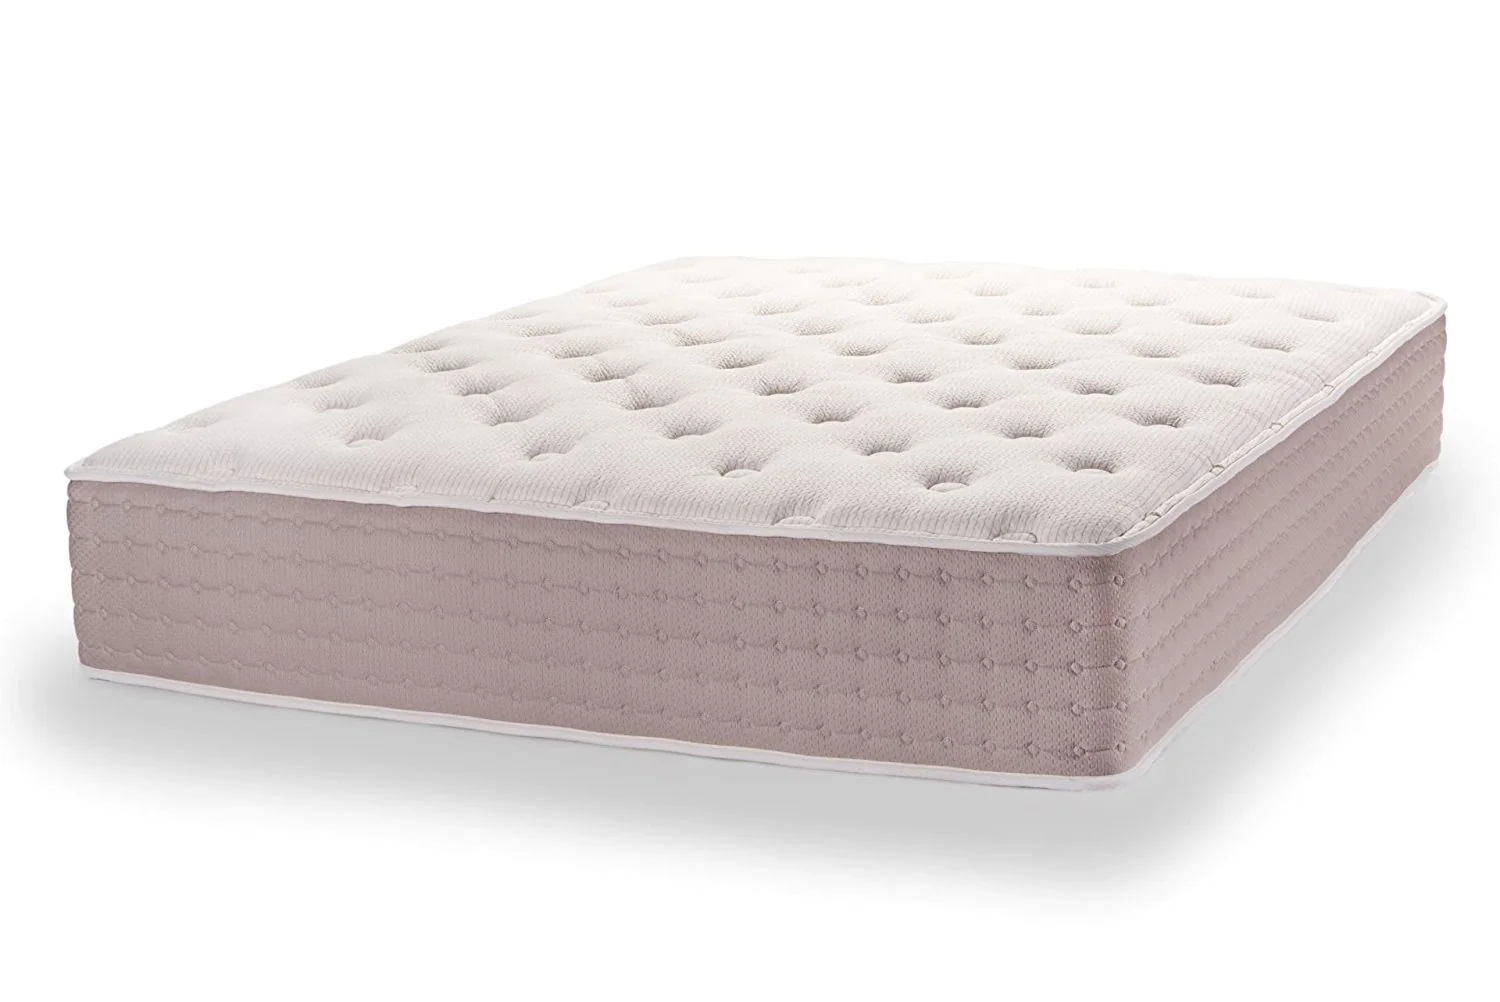 dunlop mattress sold in stores